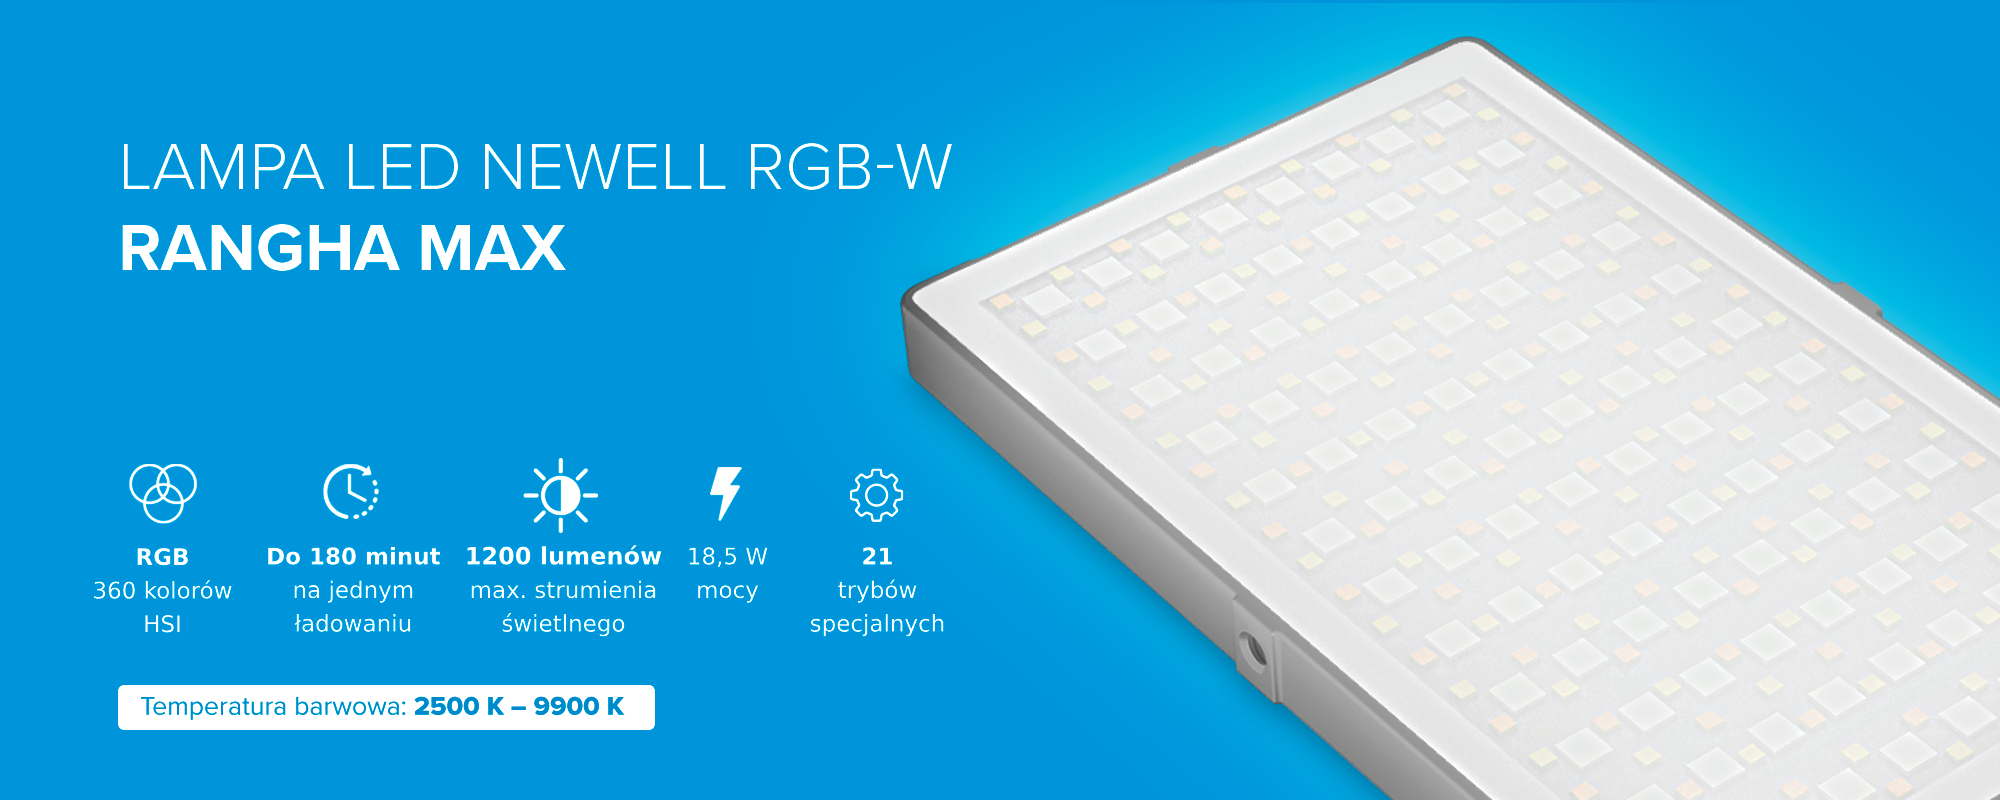 Newell RGB-W Rangha Max LED Lamp